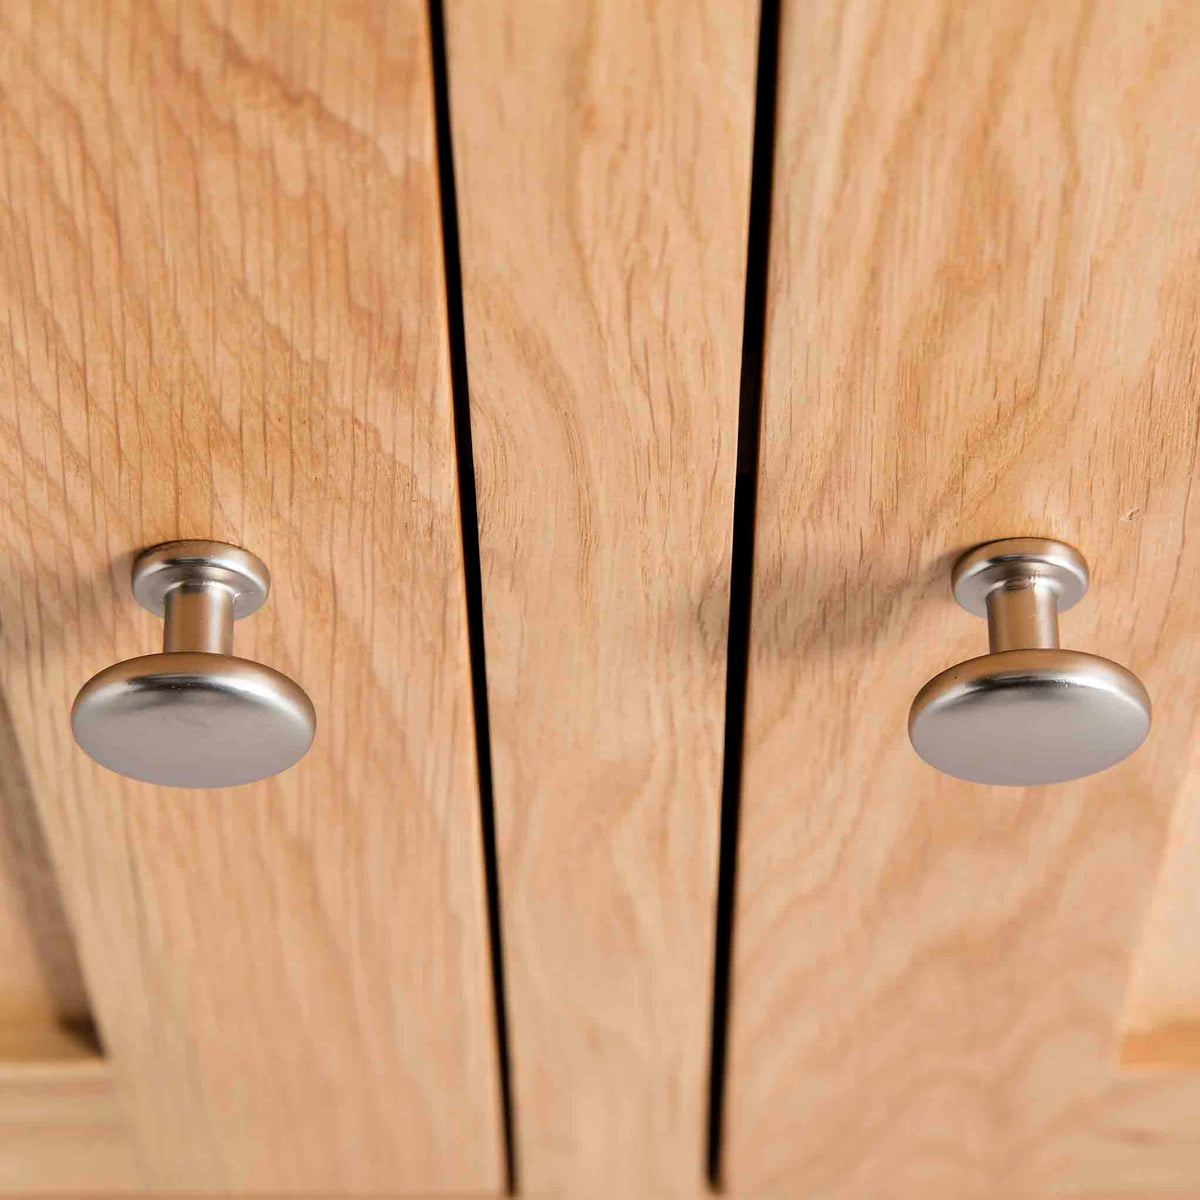 London Oak Large Sideboard  - Close up of cupboard door knobs